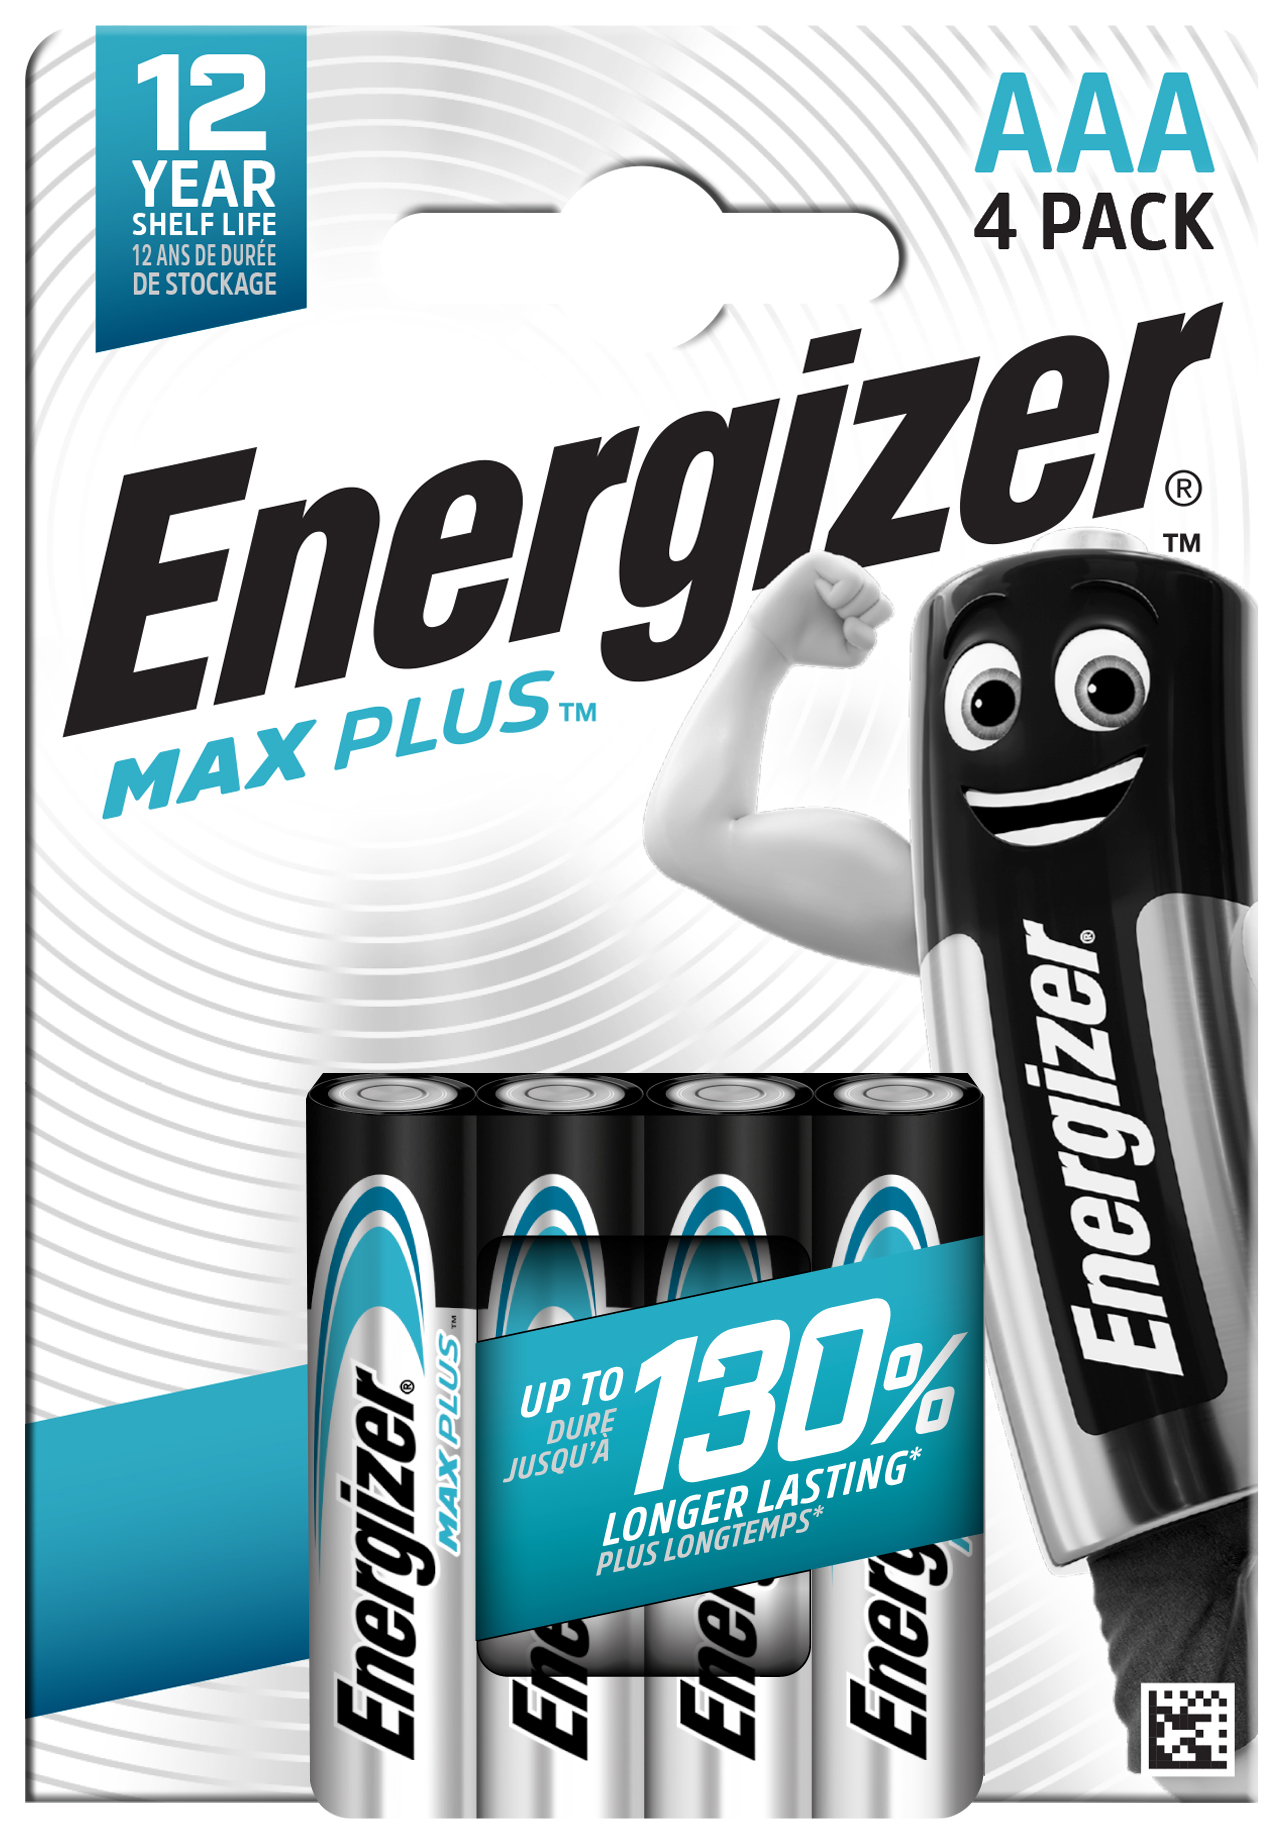 Energizer Max Plus CHP4 Alkaline AAA Batteries - Pack of 4